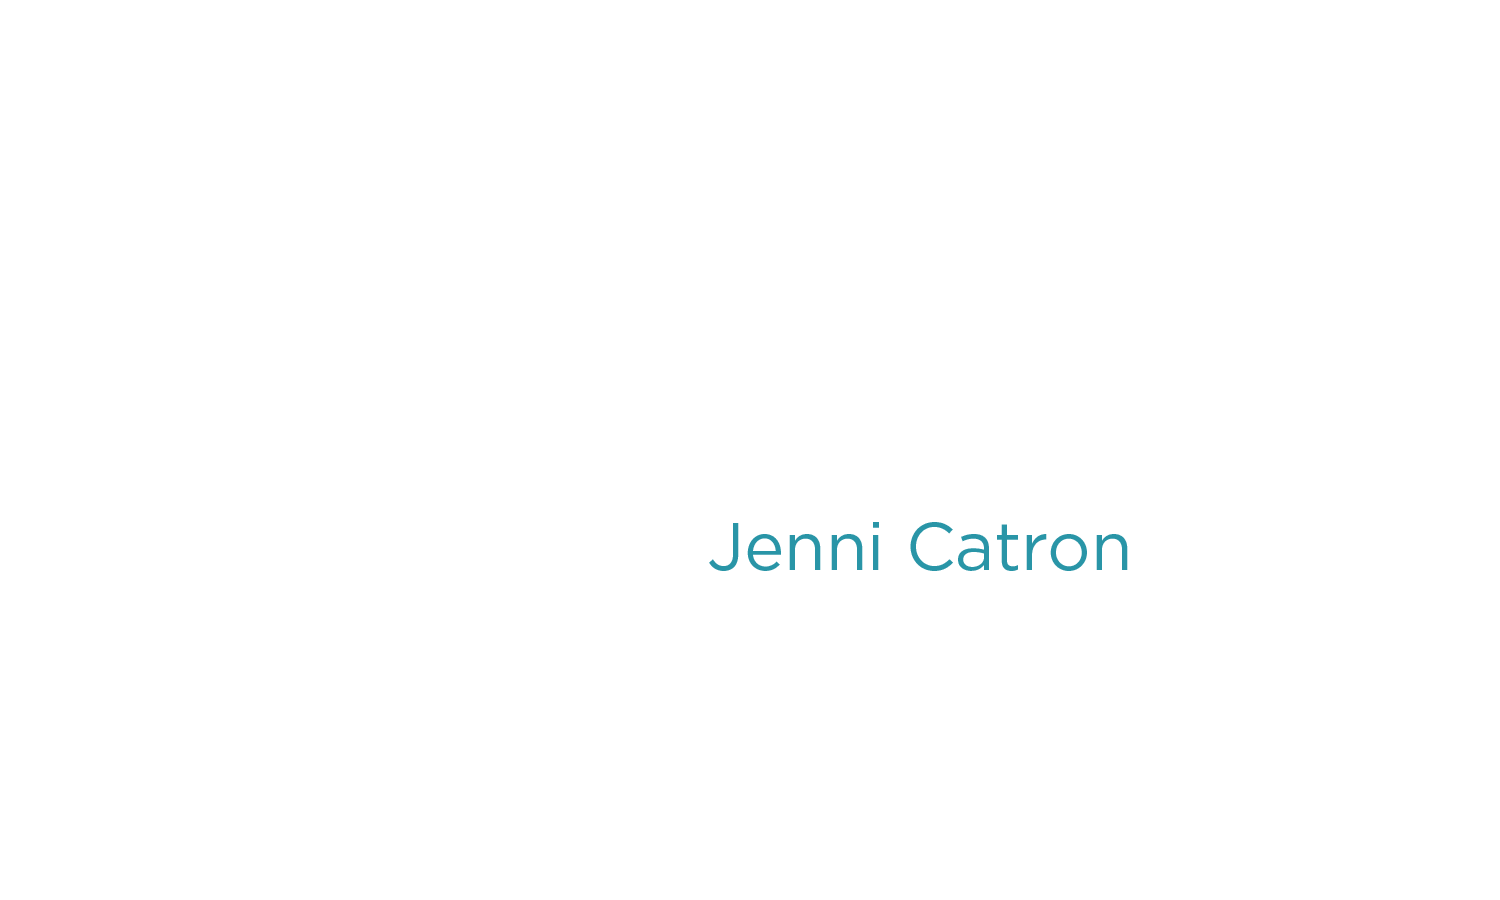 Jenni Catron - Jenni Catron